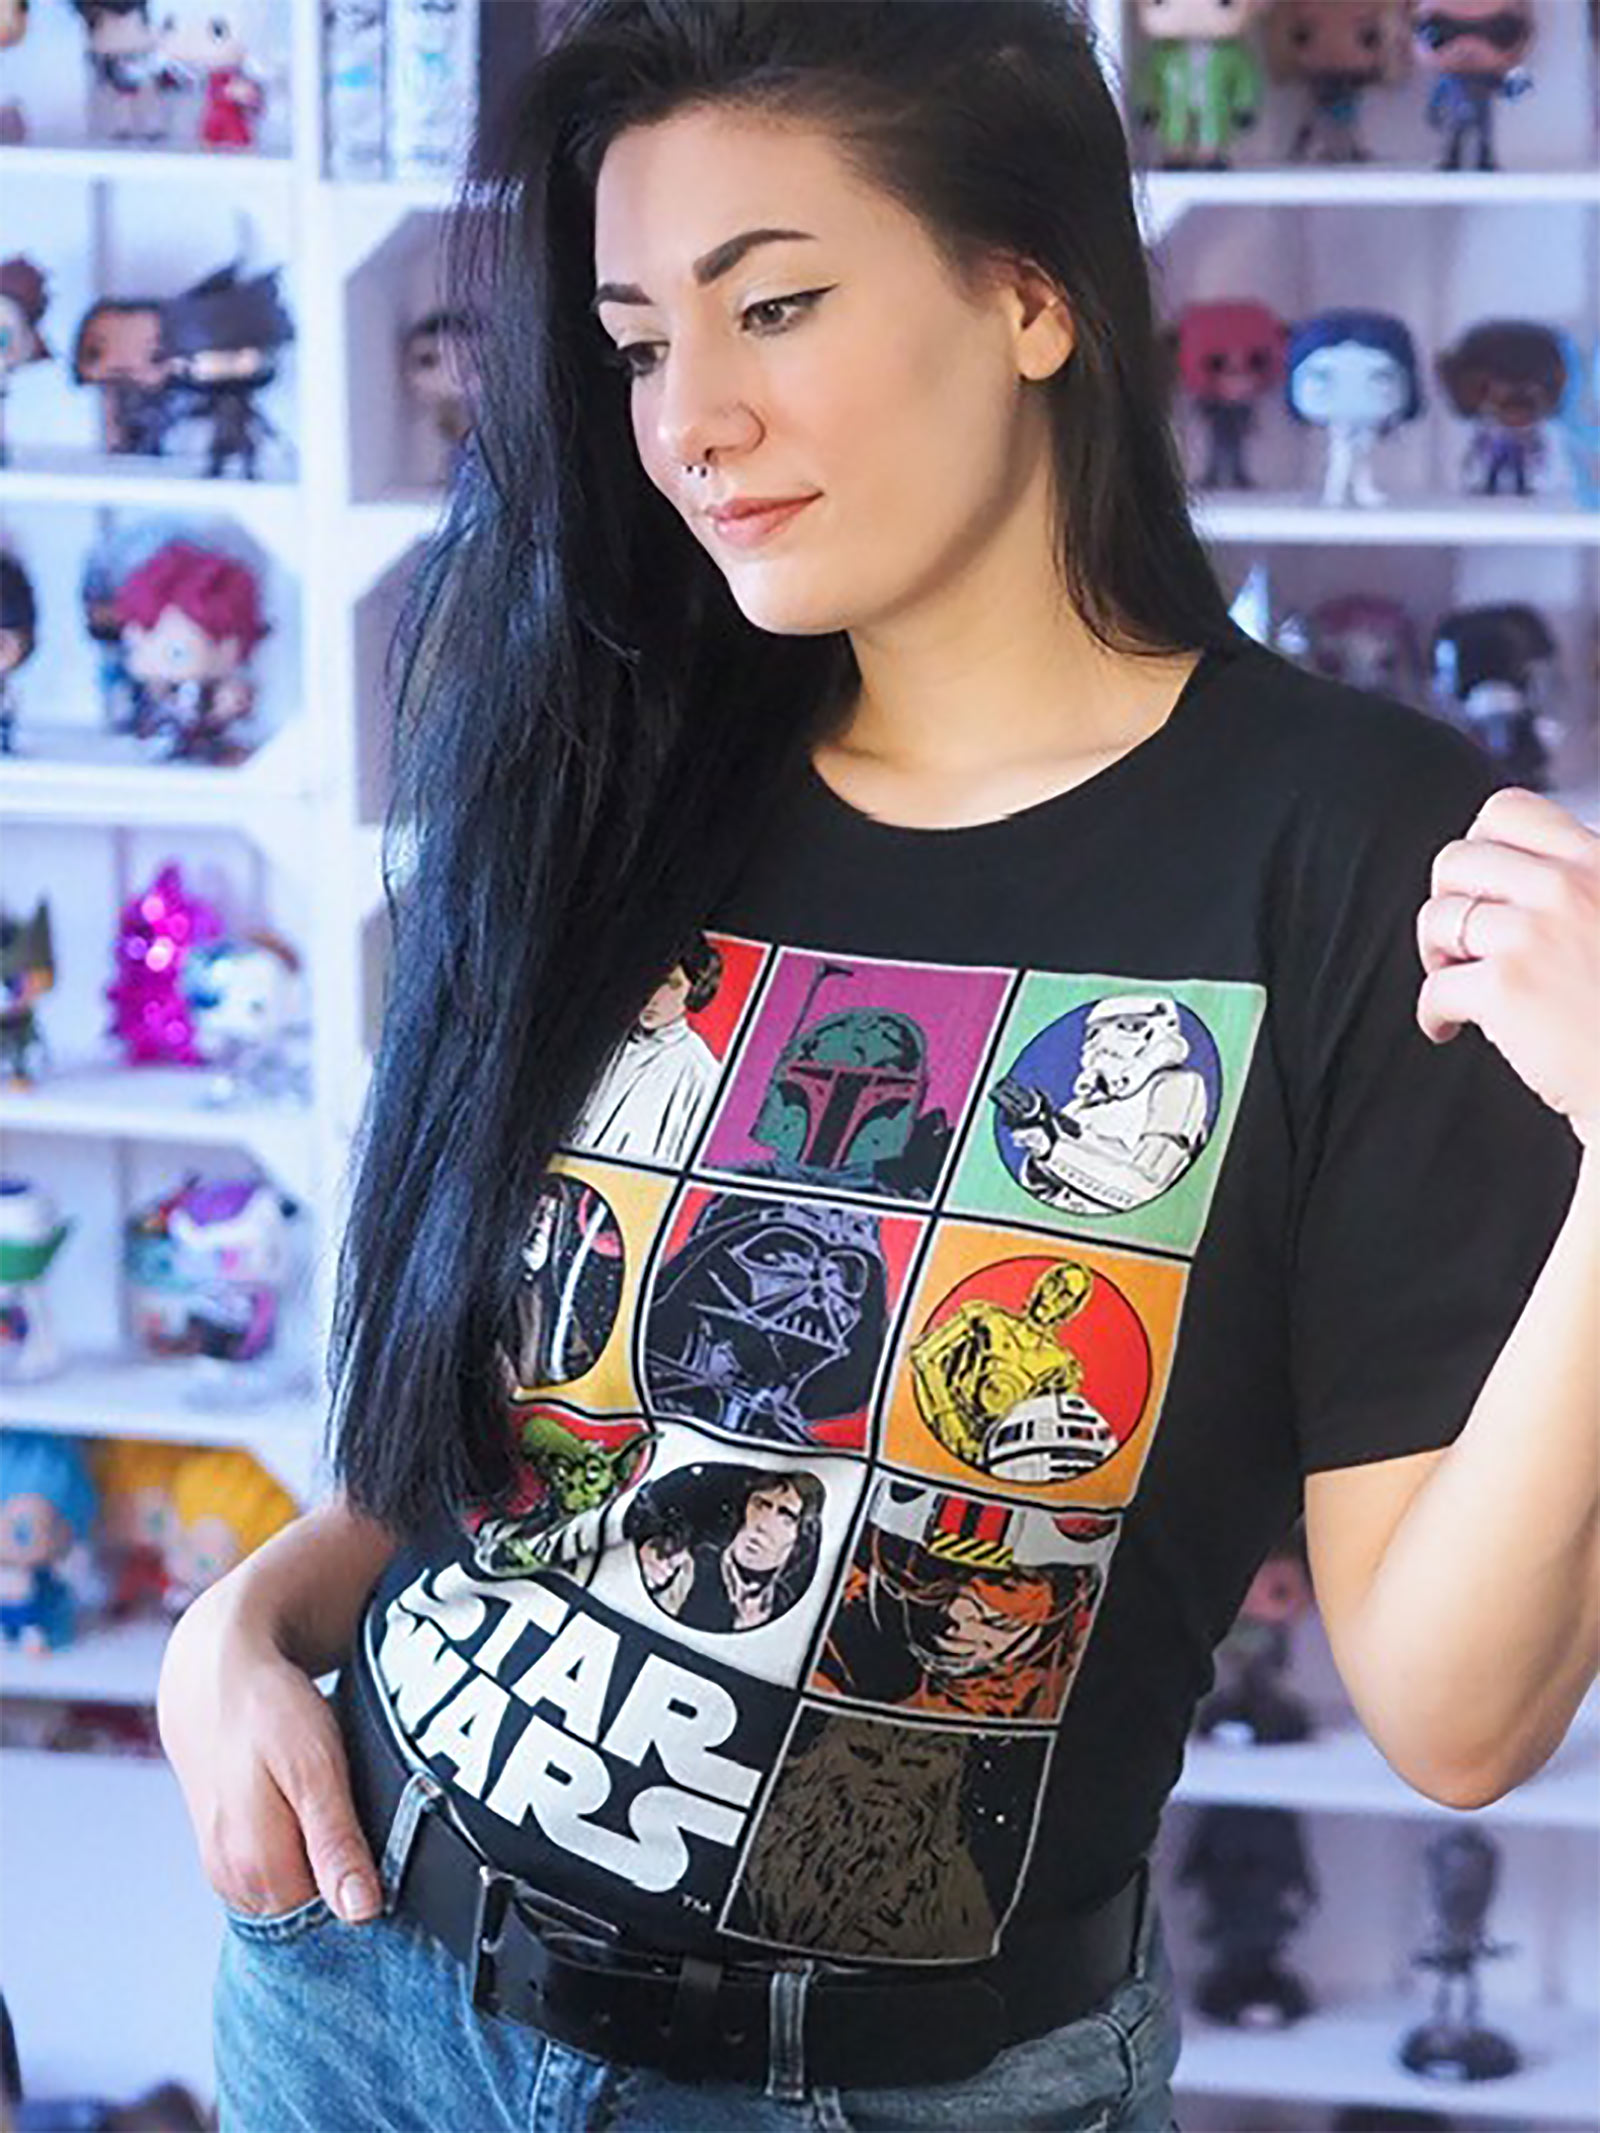 Star Wars - Characters T-Shirt schwarz